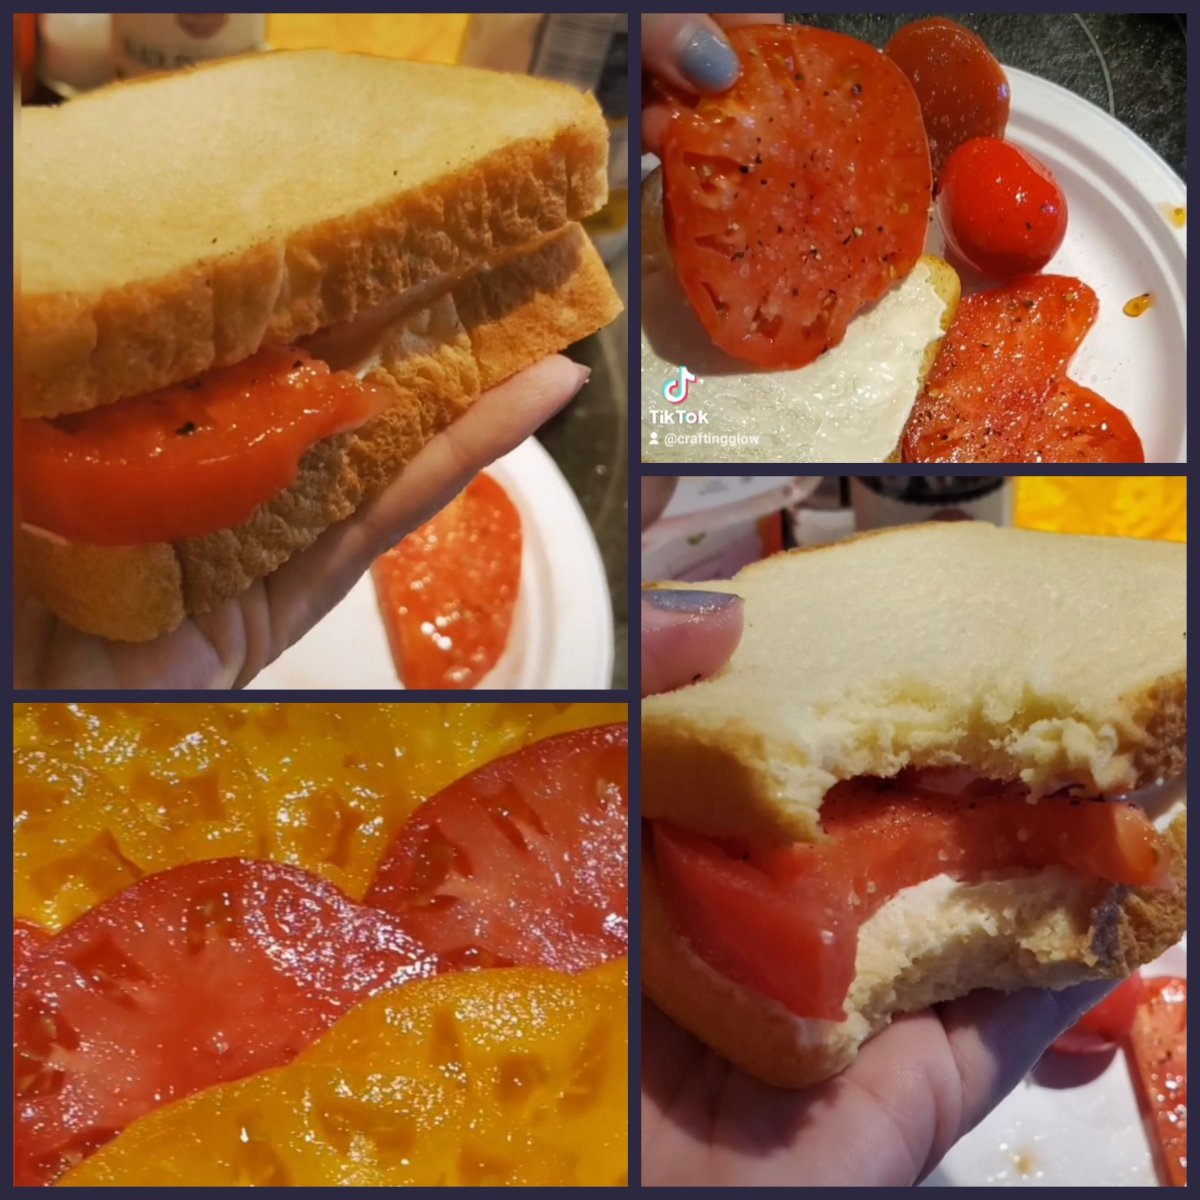 Tomato Season is the Best!